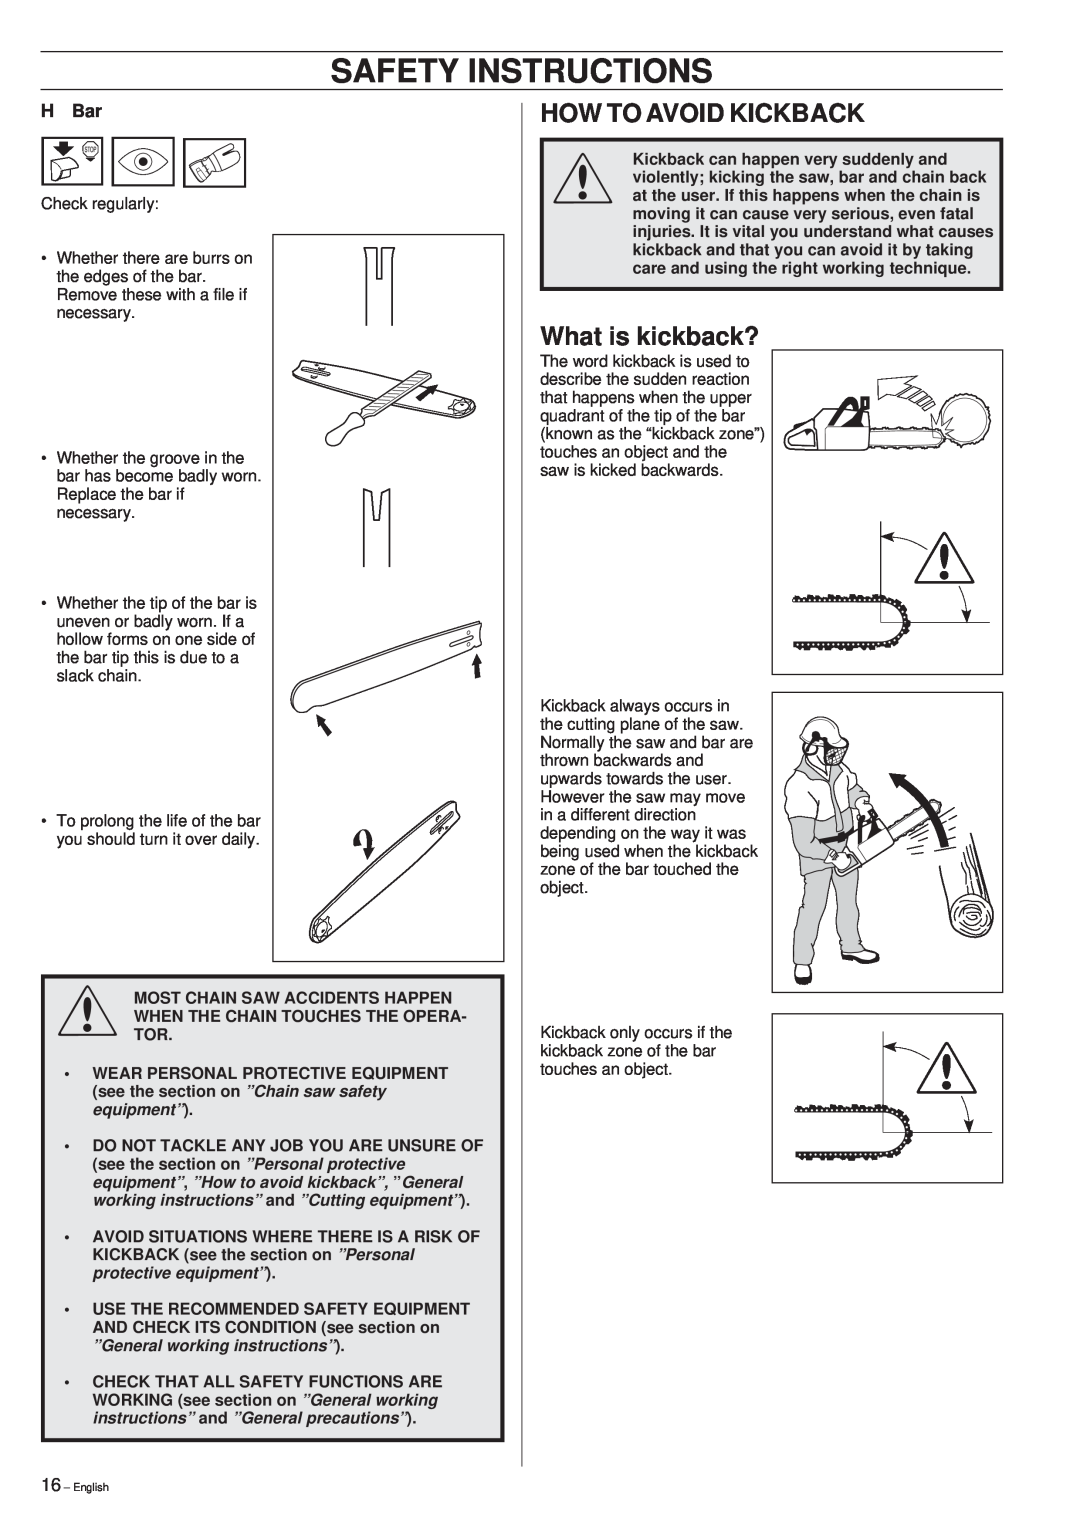 Husqvarna 340, 345, 350 manual How To Avoid Kickback, What is kickback?, H Bar, Safety Instructions 